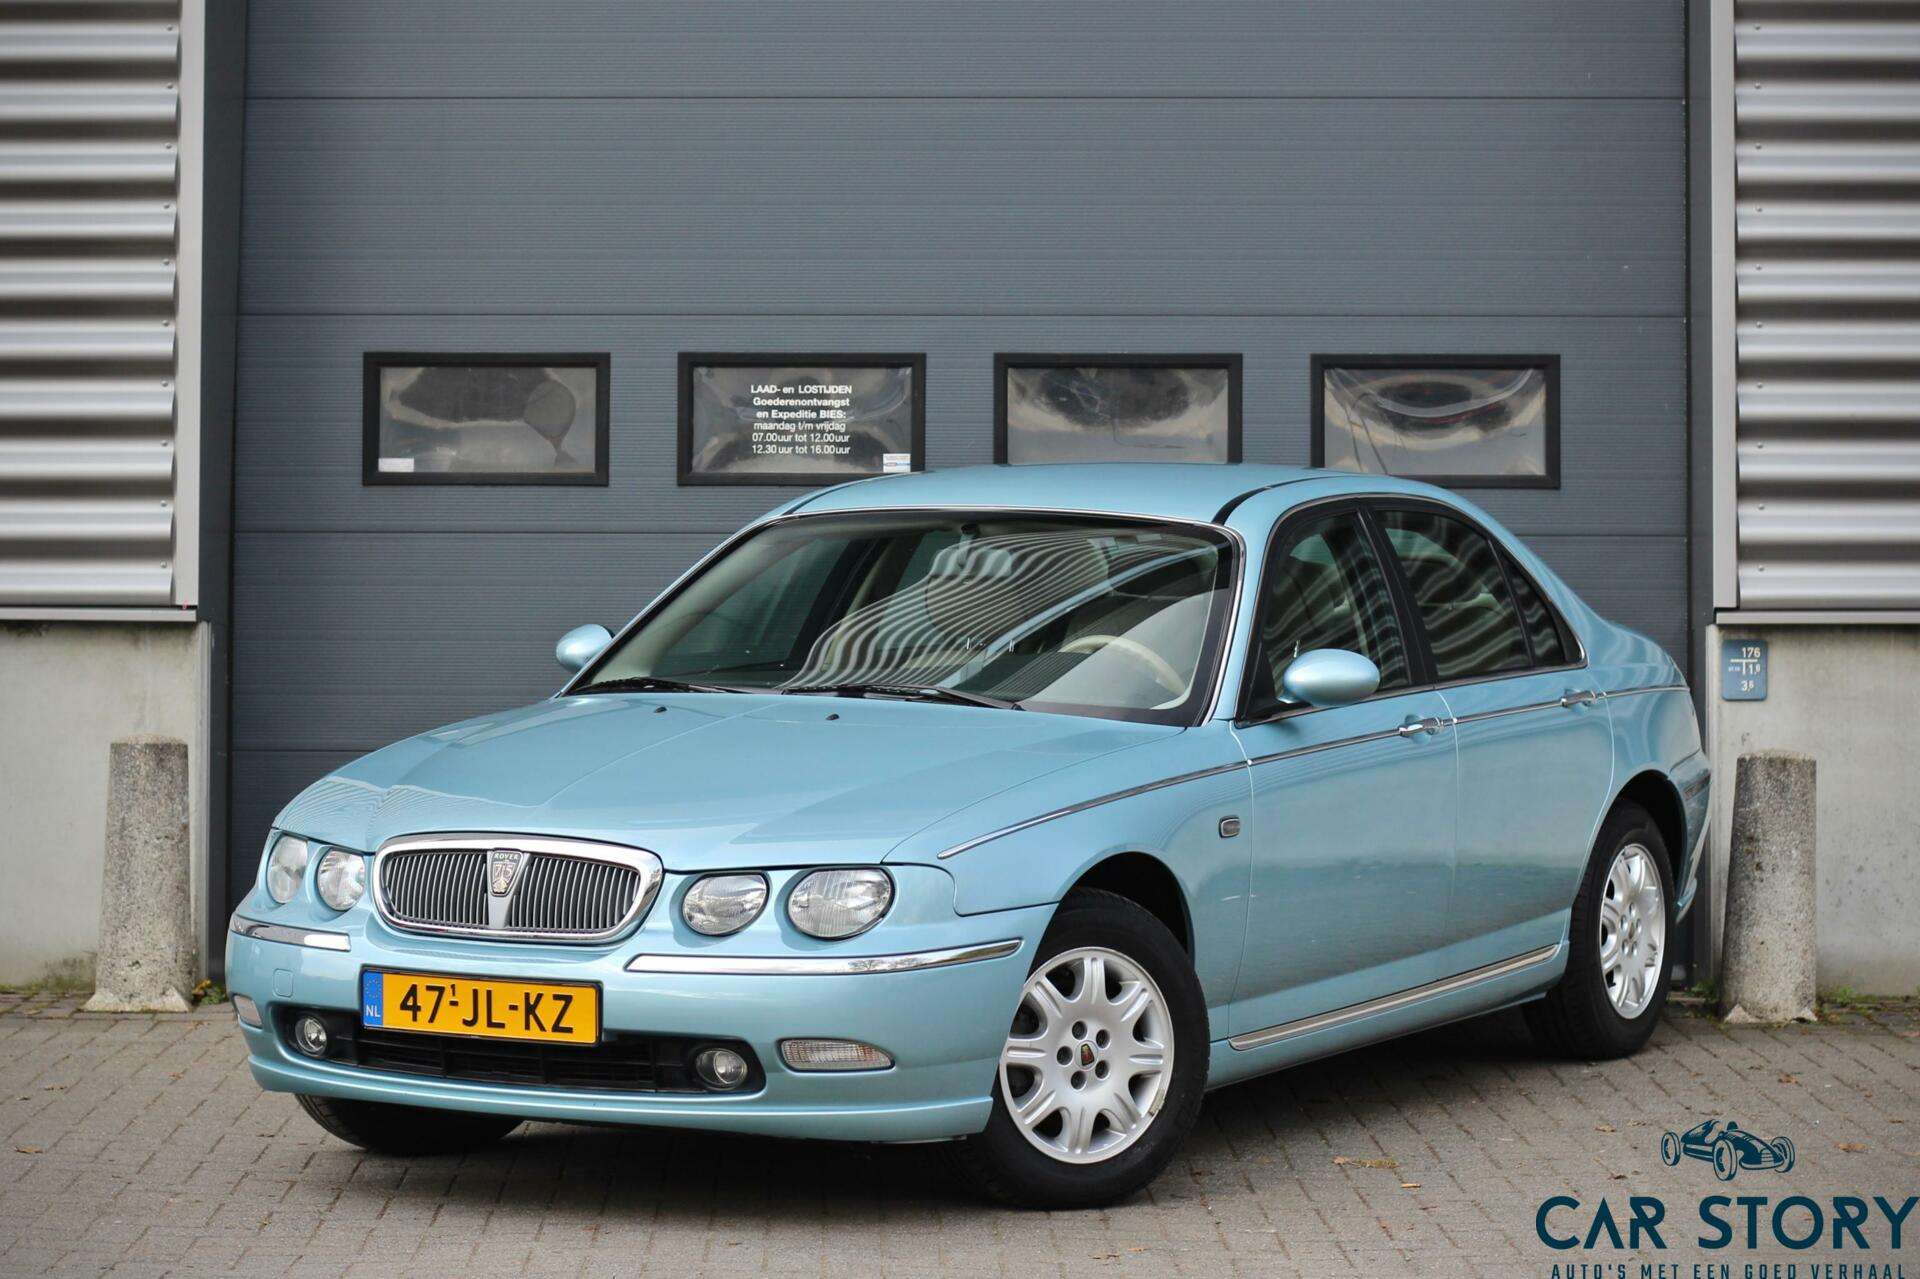 Rover 75 Sedan in Blue used in MARUM for € 9,700.-